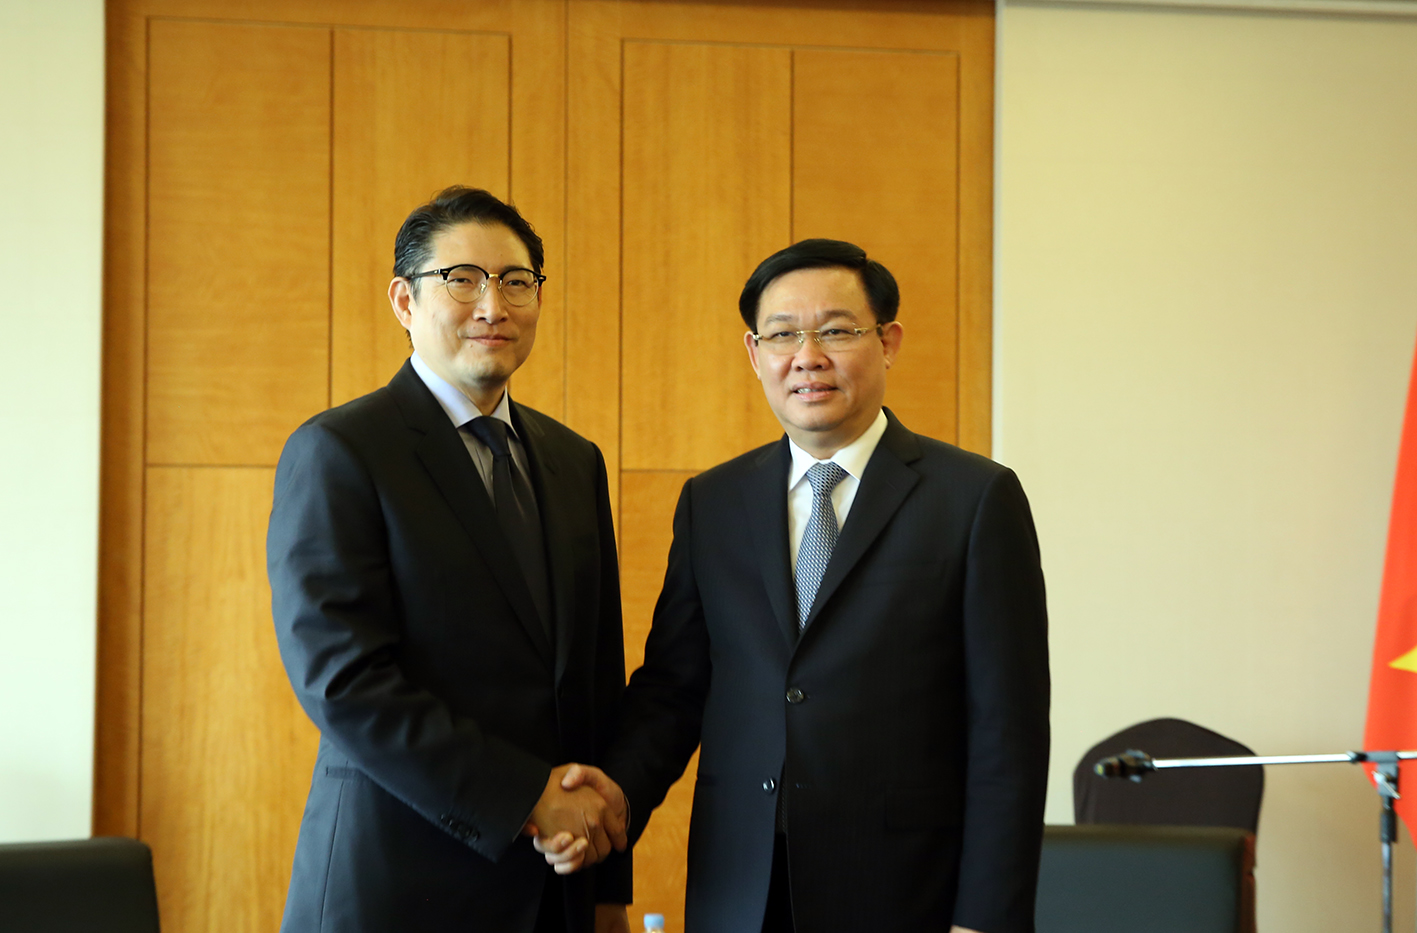 Deputy Prime Minister Vuong Dinh Hue (r) and Hyosung’s President Hyun Joon (l). (Source: VGP)